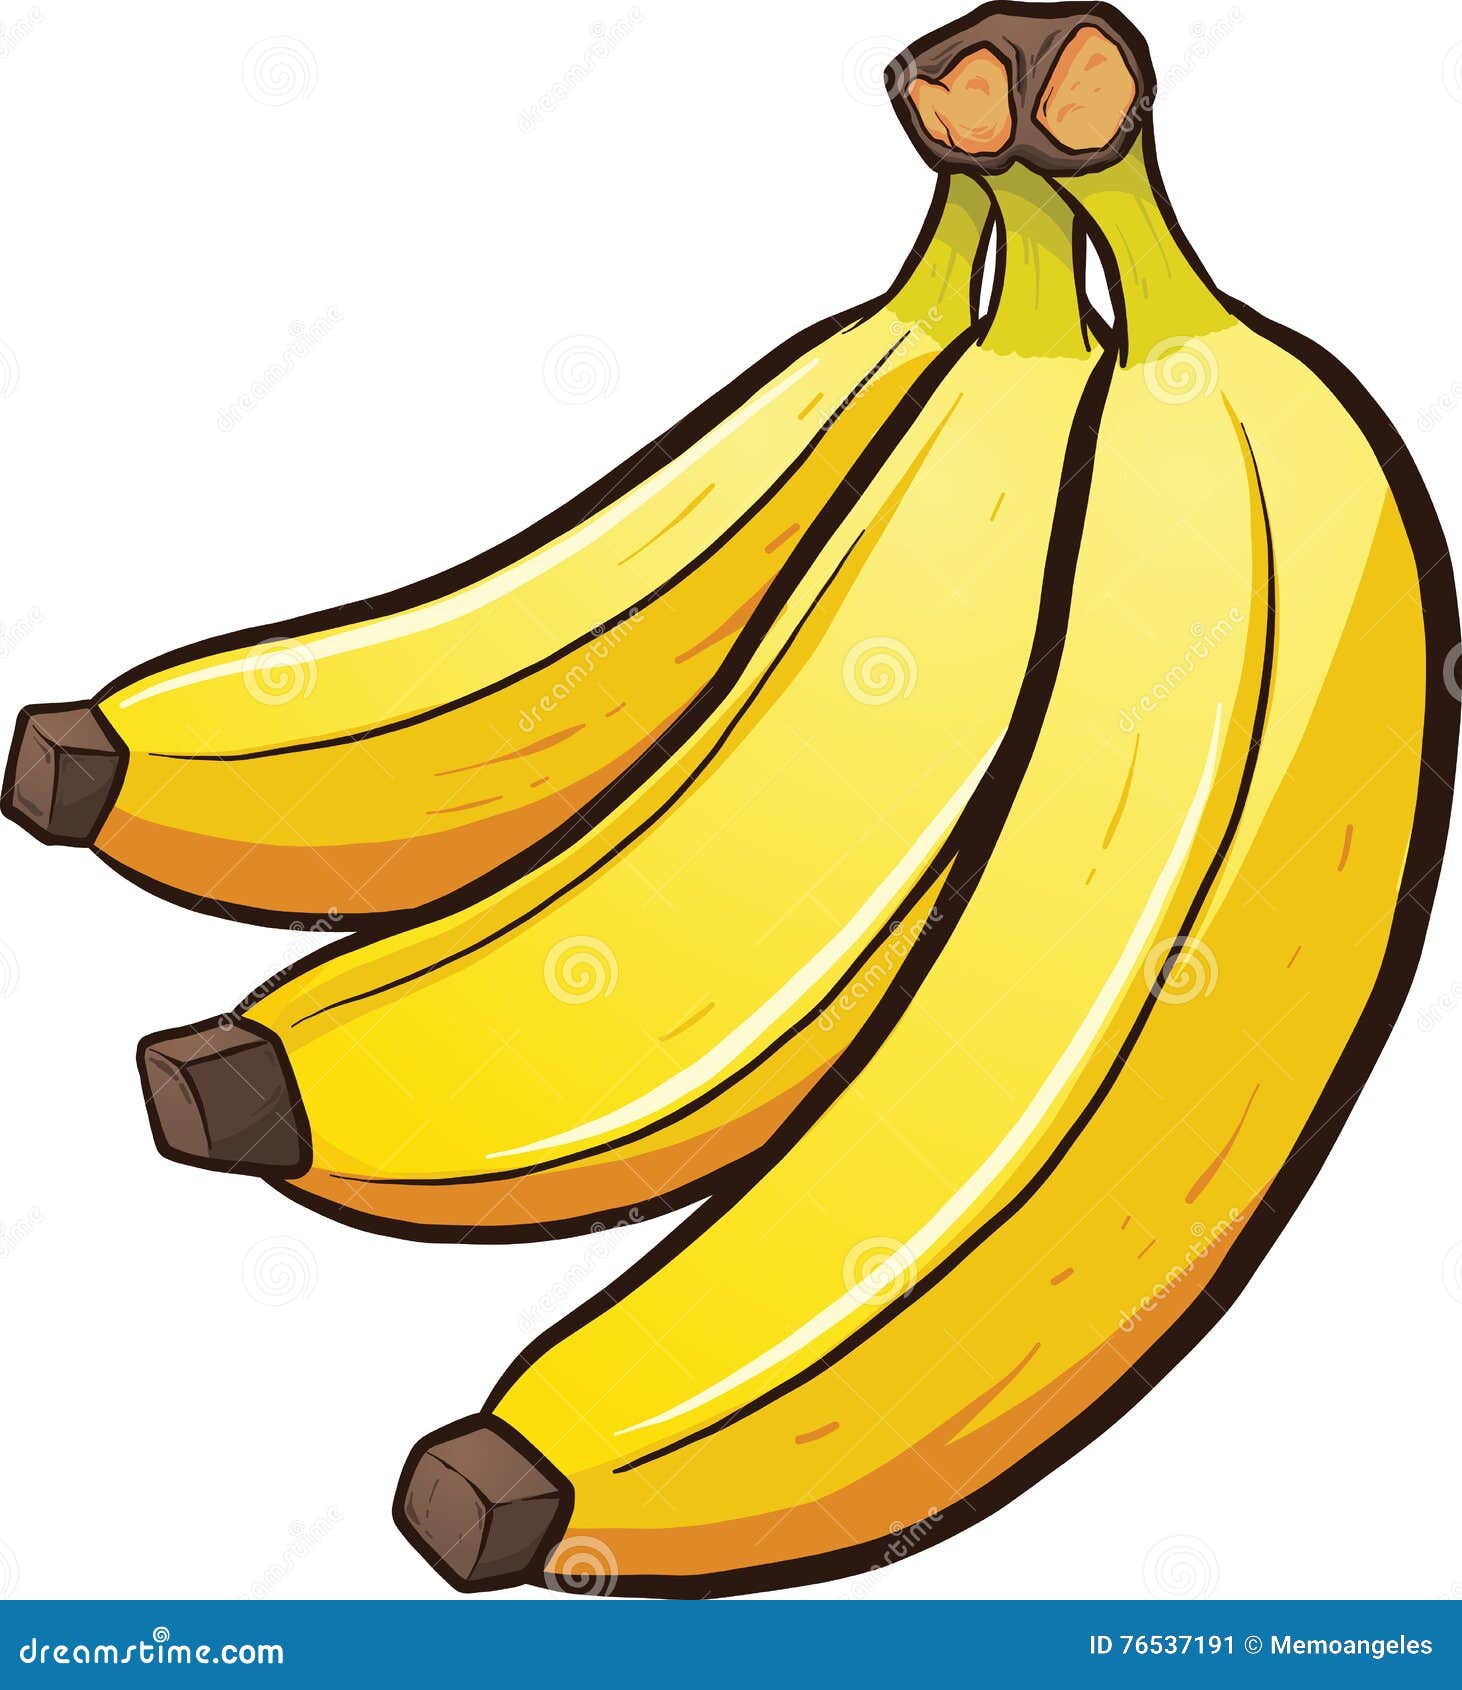 cartoon bananas